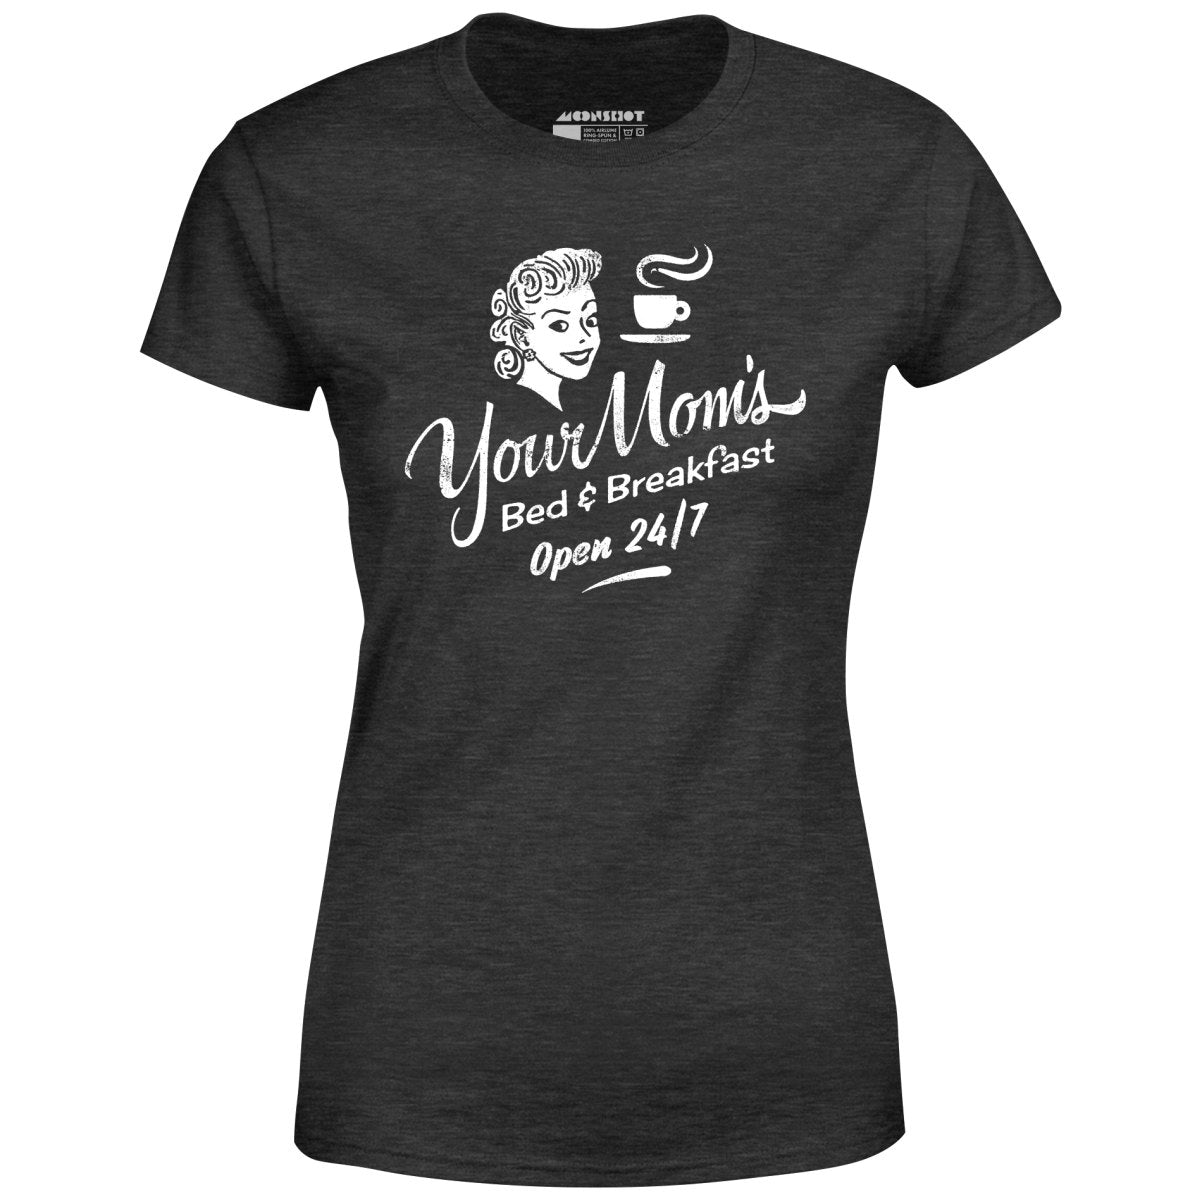 Your Mom's Bed & Breakfast - Women's T-Shirt